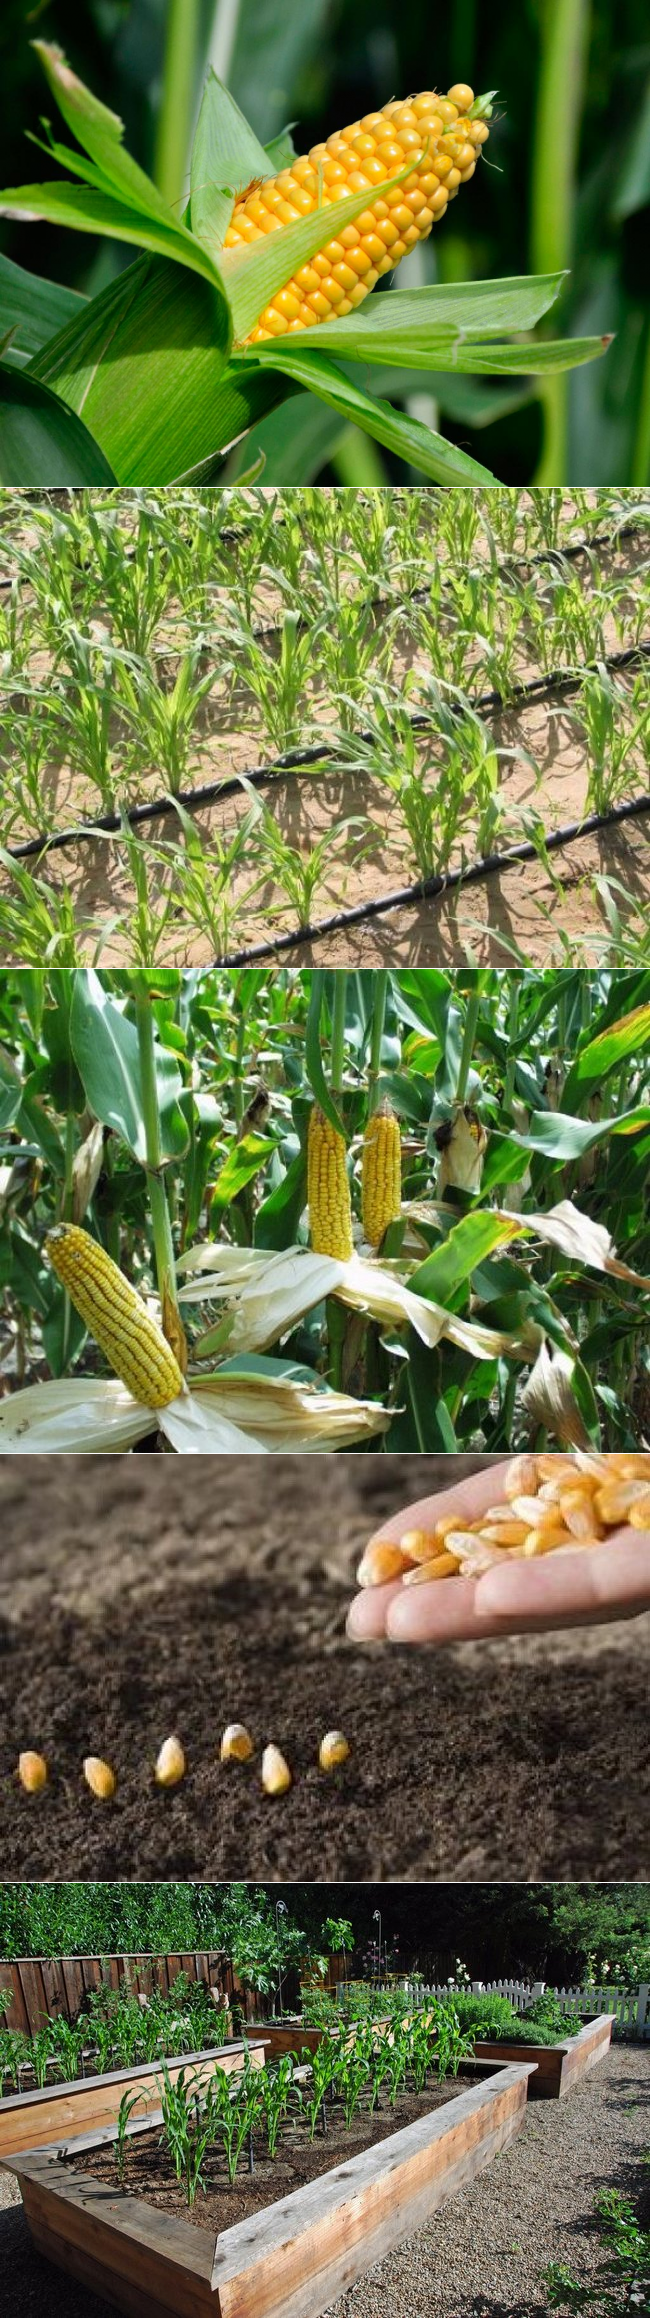 Как посадить кукурузу в огороде. Кукуруза на грядке. Кукуруза амеро. Кукуруза в открытом грунте. Посадка кукурузы.